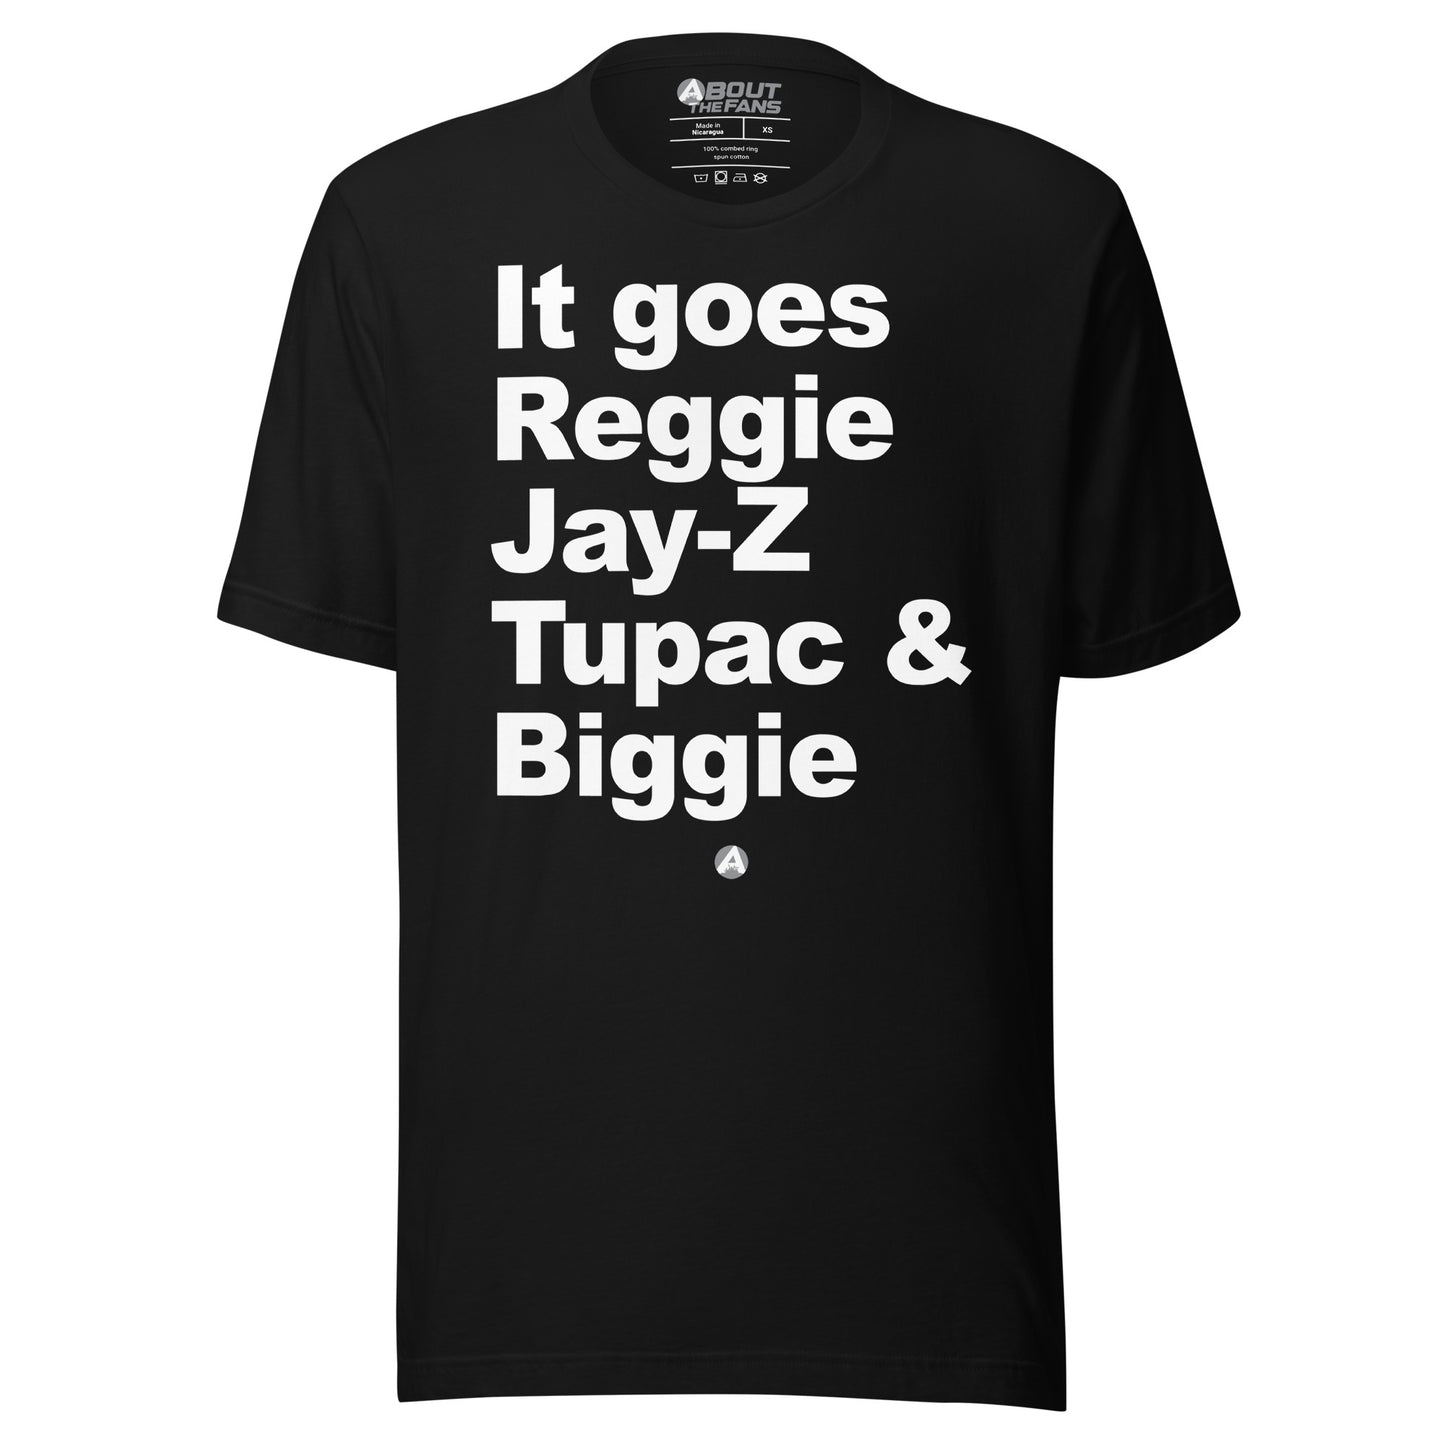 It goes Reggie ... Shirt